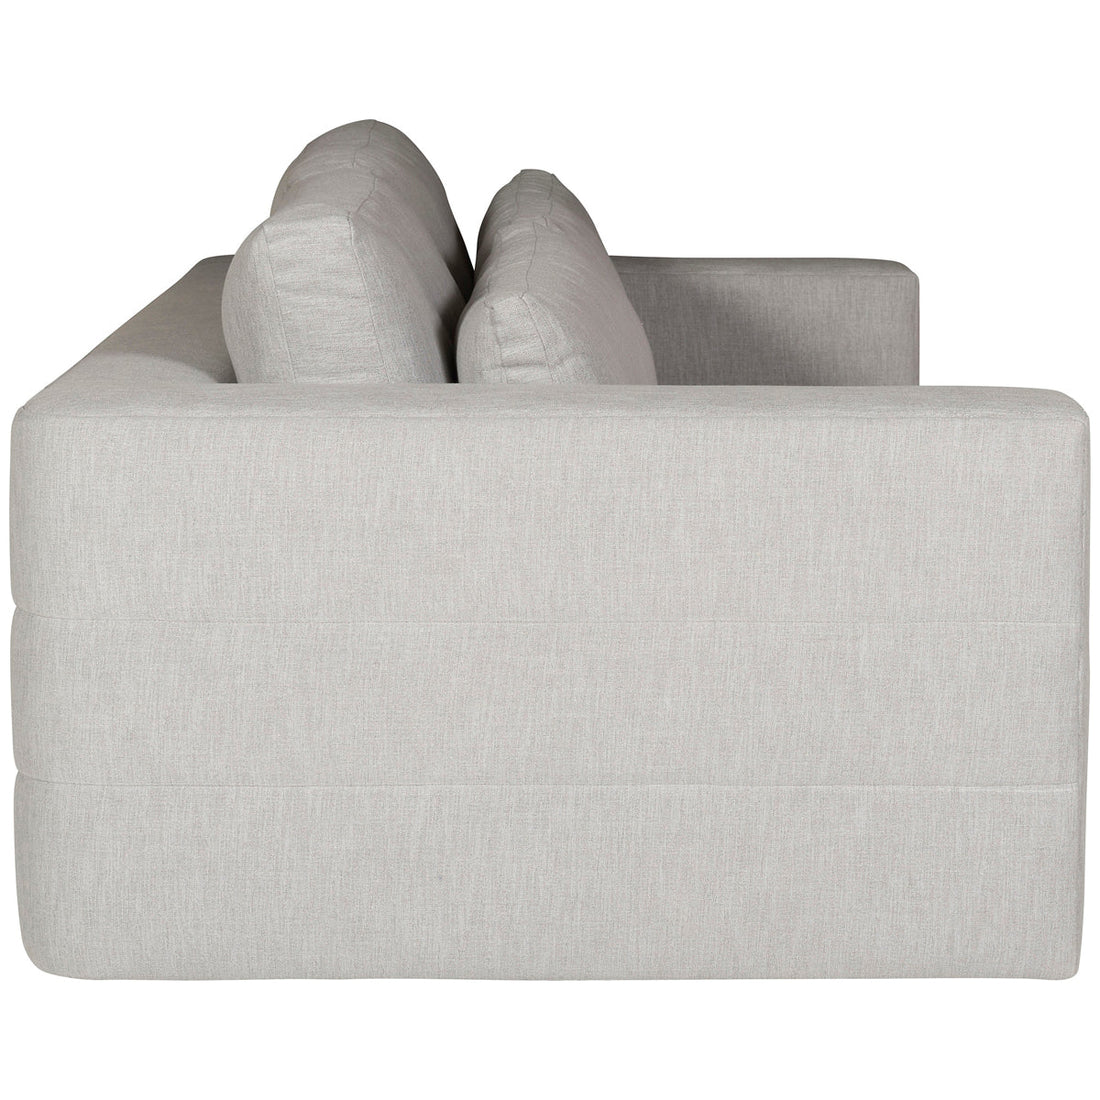 Vanguard Furniture Leone 2-Seat Sofa